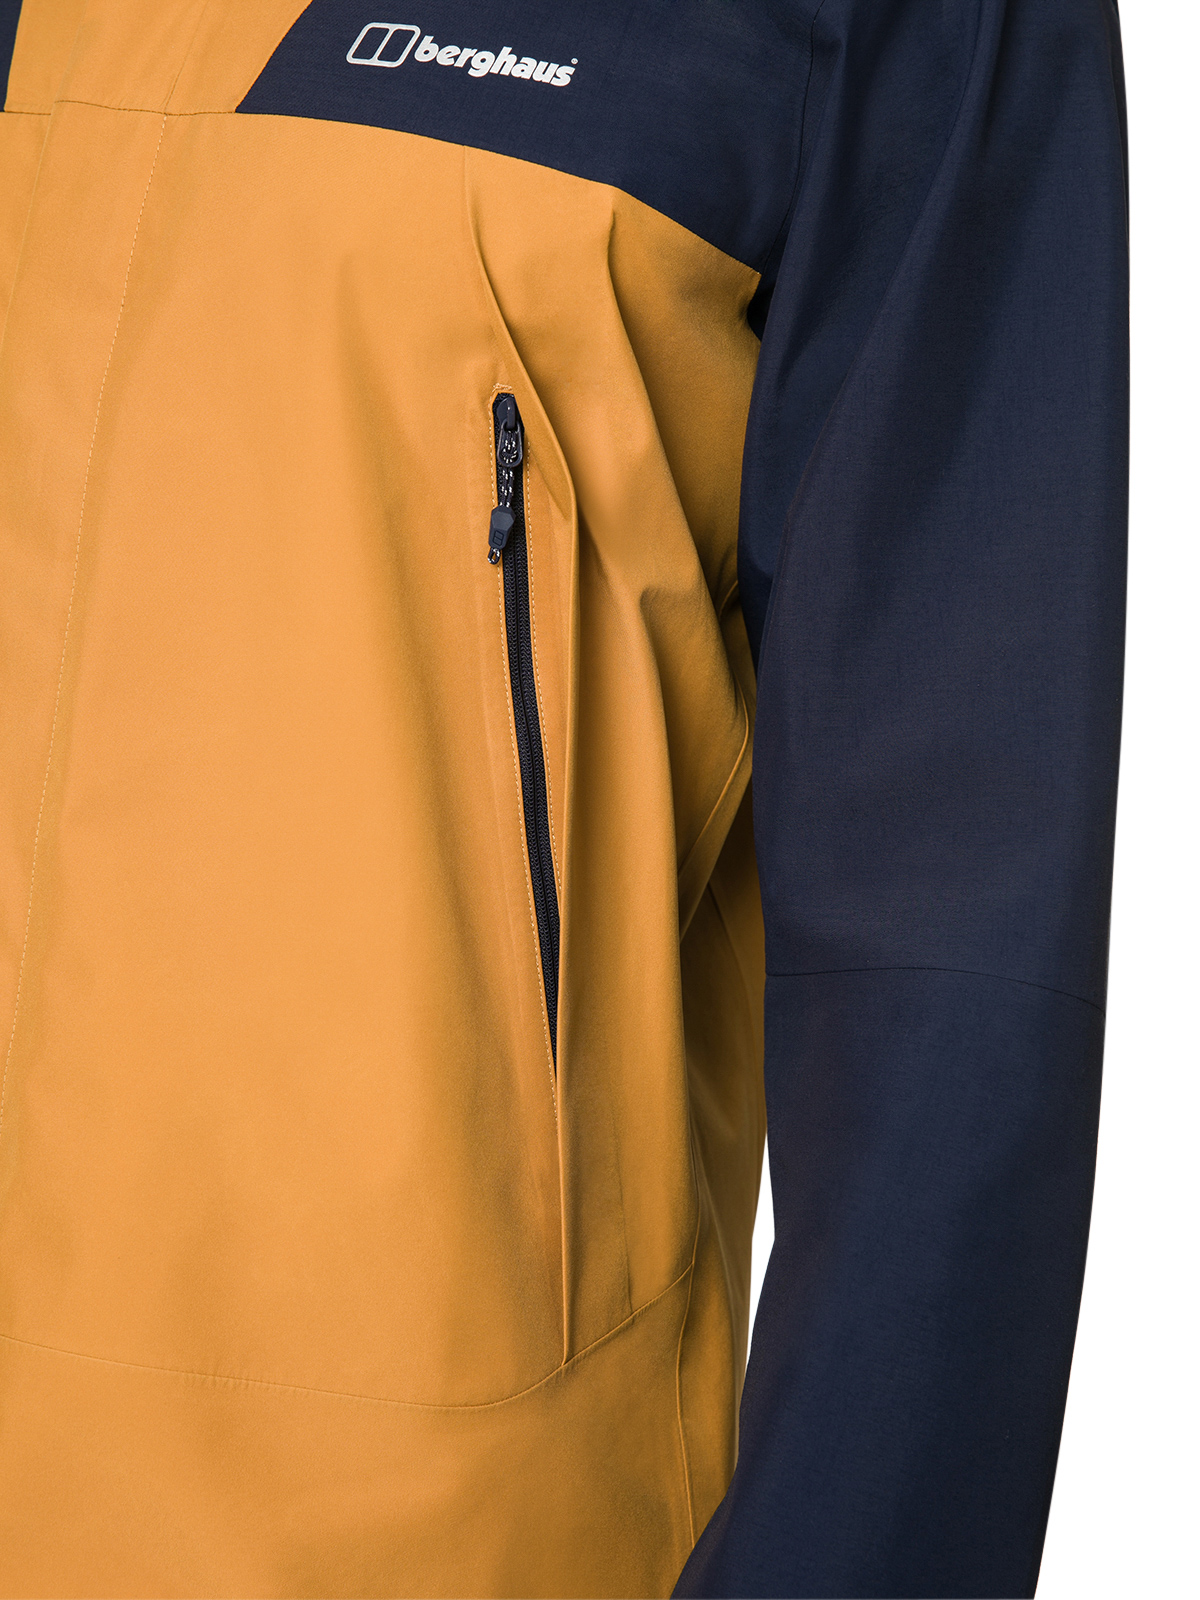 berghaus ATHUNDER waterproof jacket for mountain-side pocket